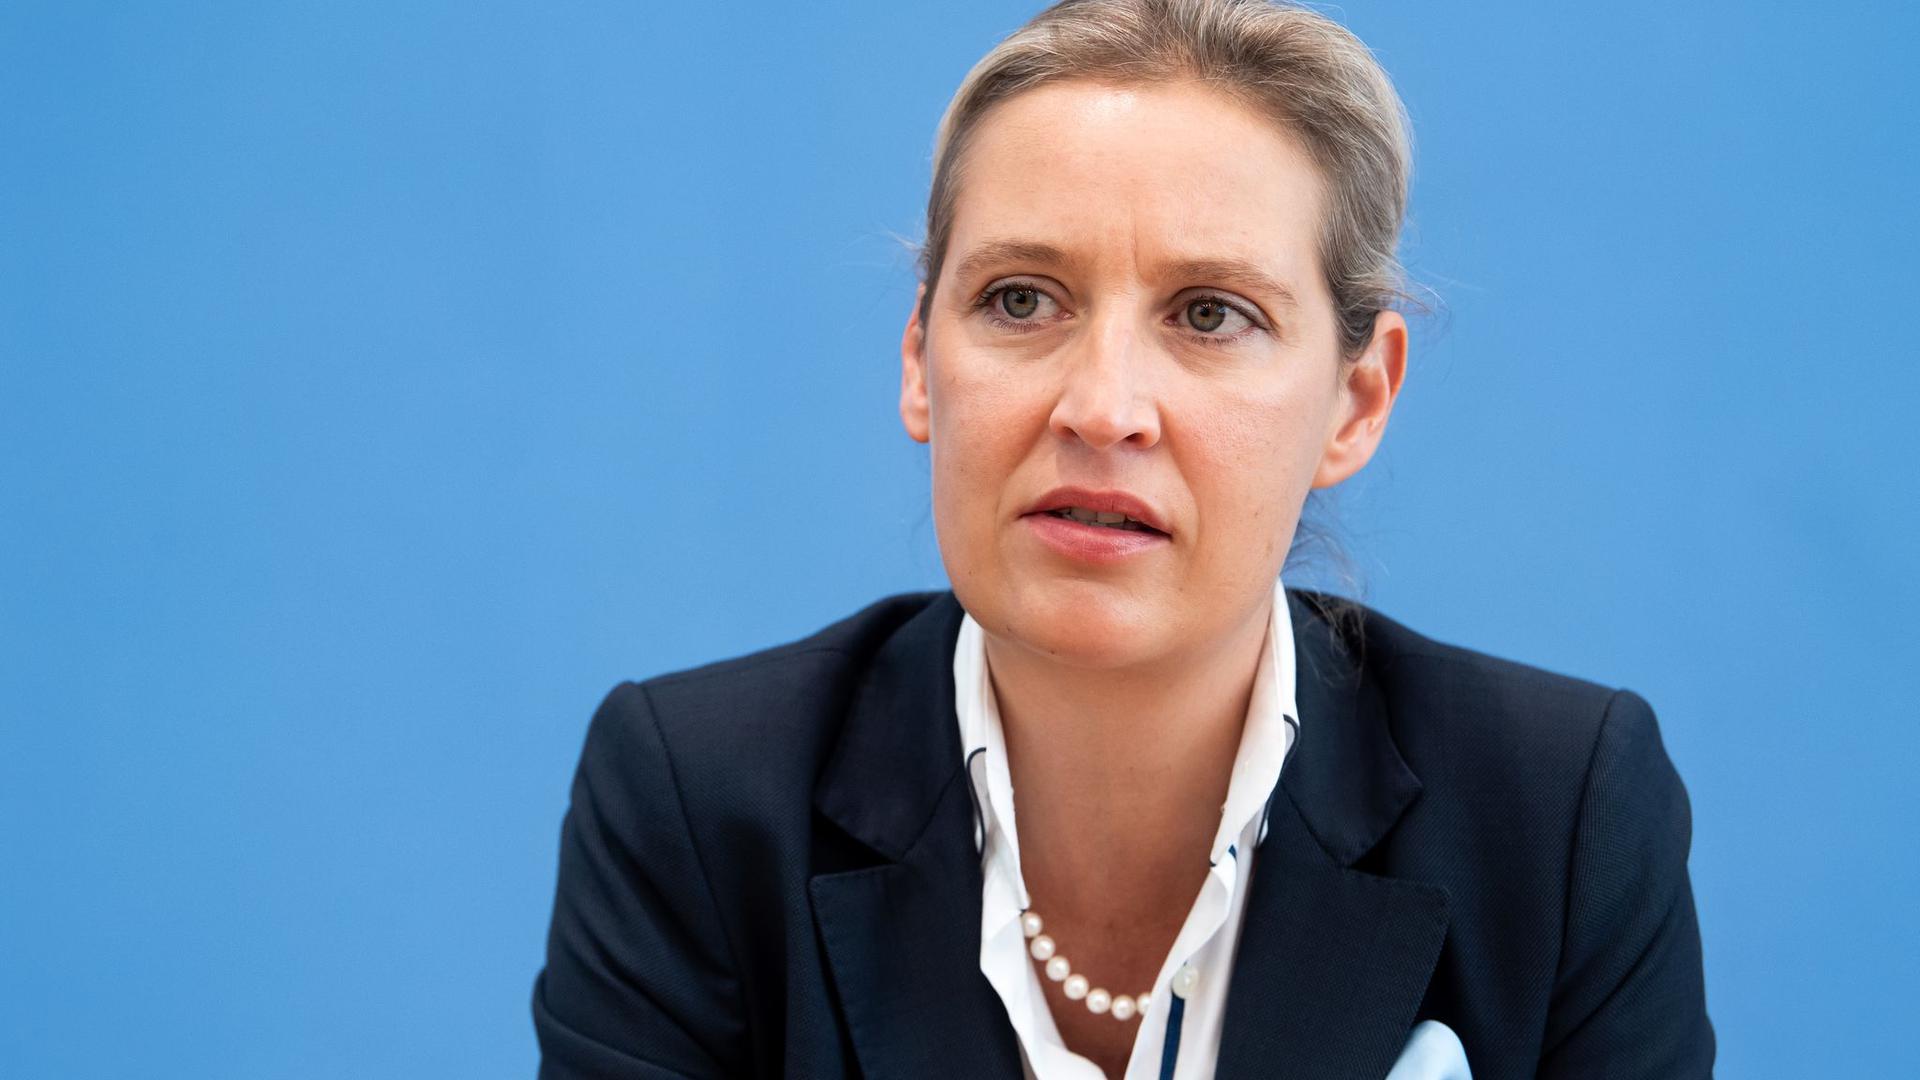 Alice Weidel ist Vorsitzende der AfD-Bundestagsfraktion.